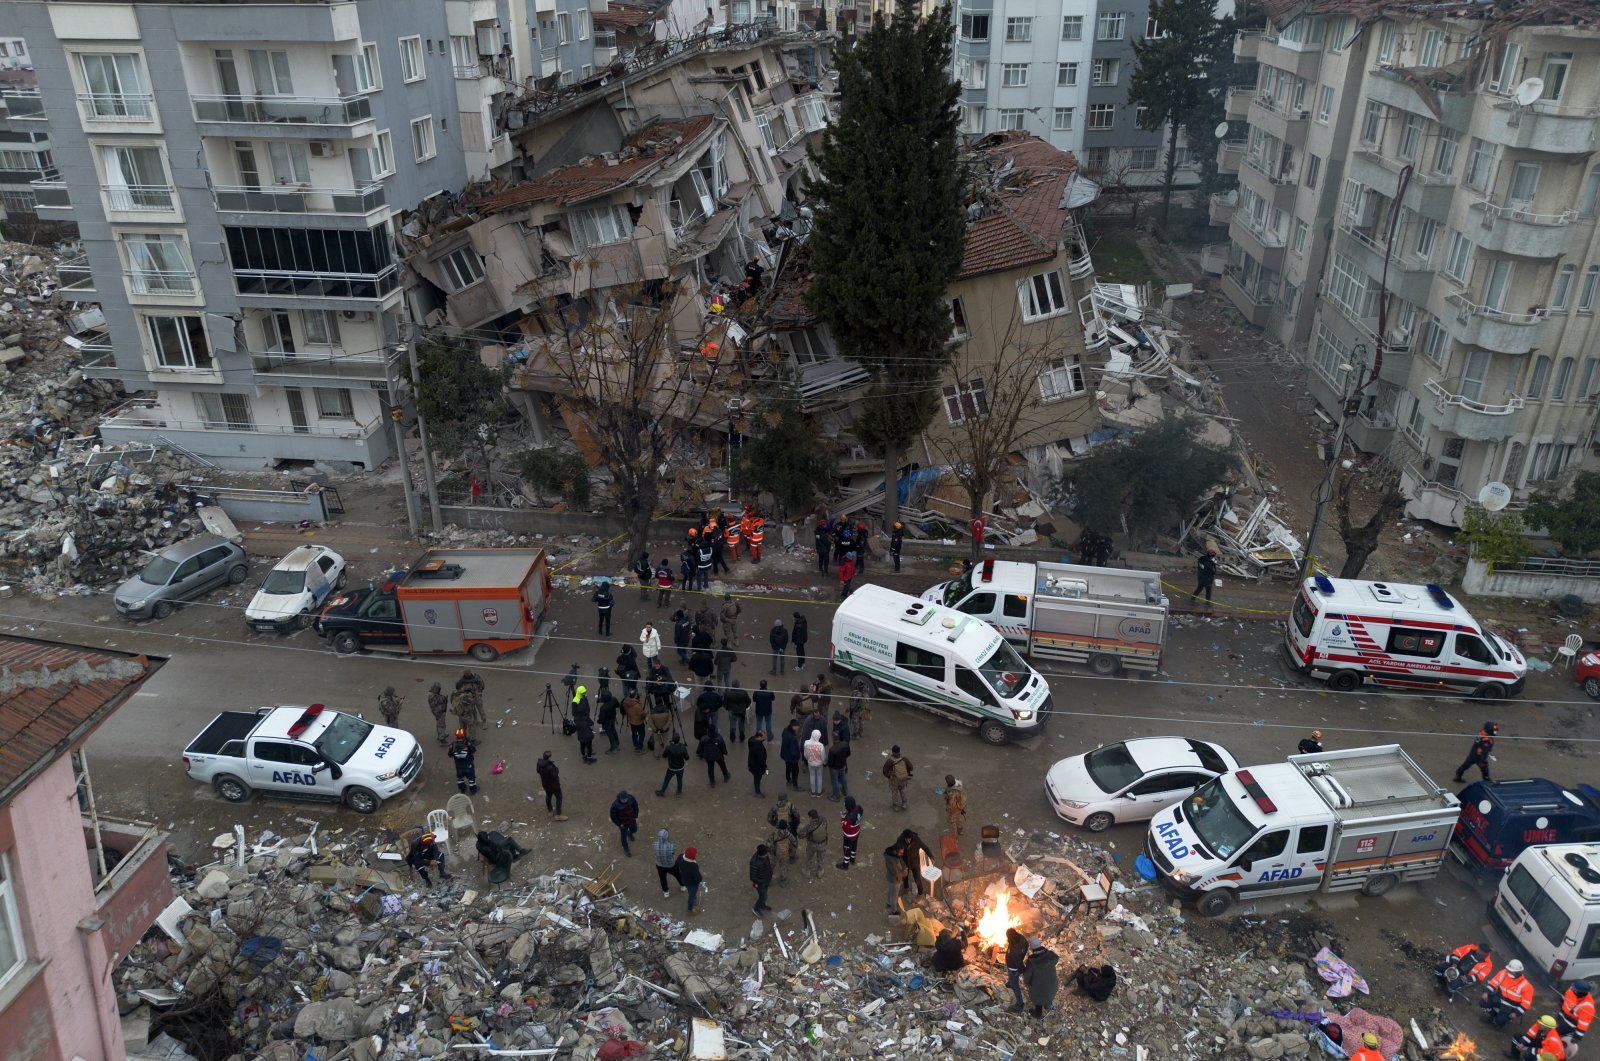 Enam tewas dalam gempa berkekuatan 6,4, 5,8 di Hatay Türkiye